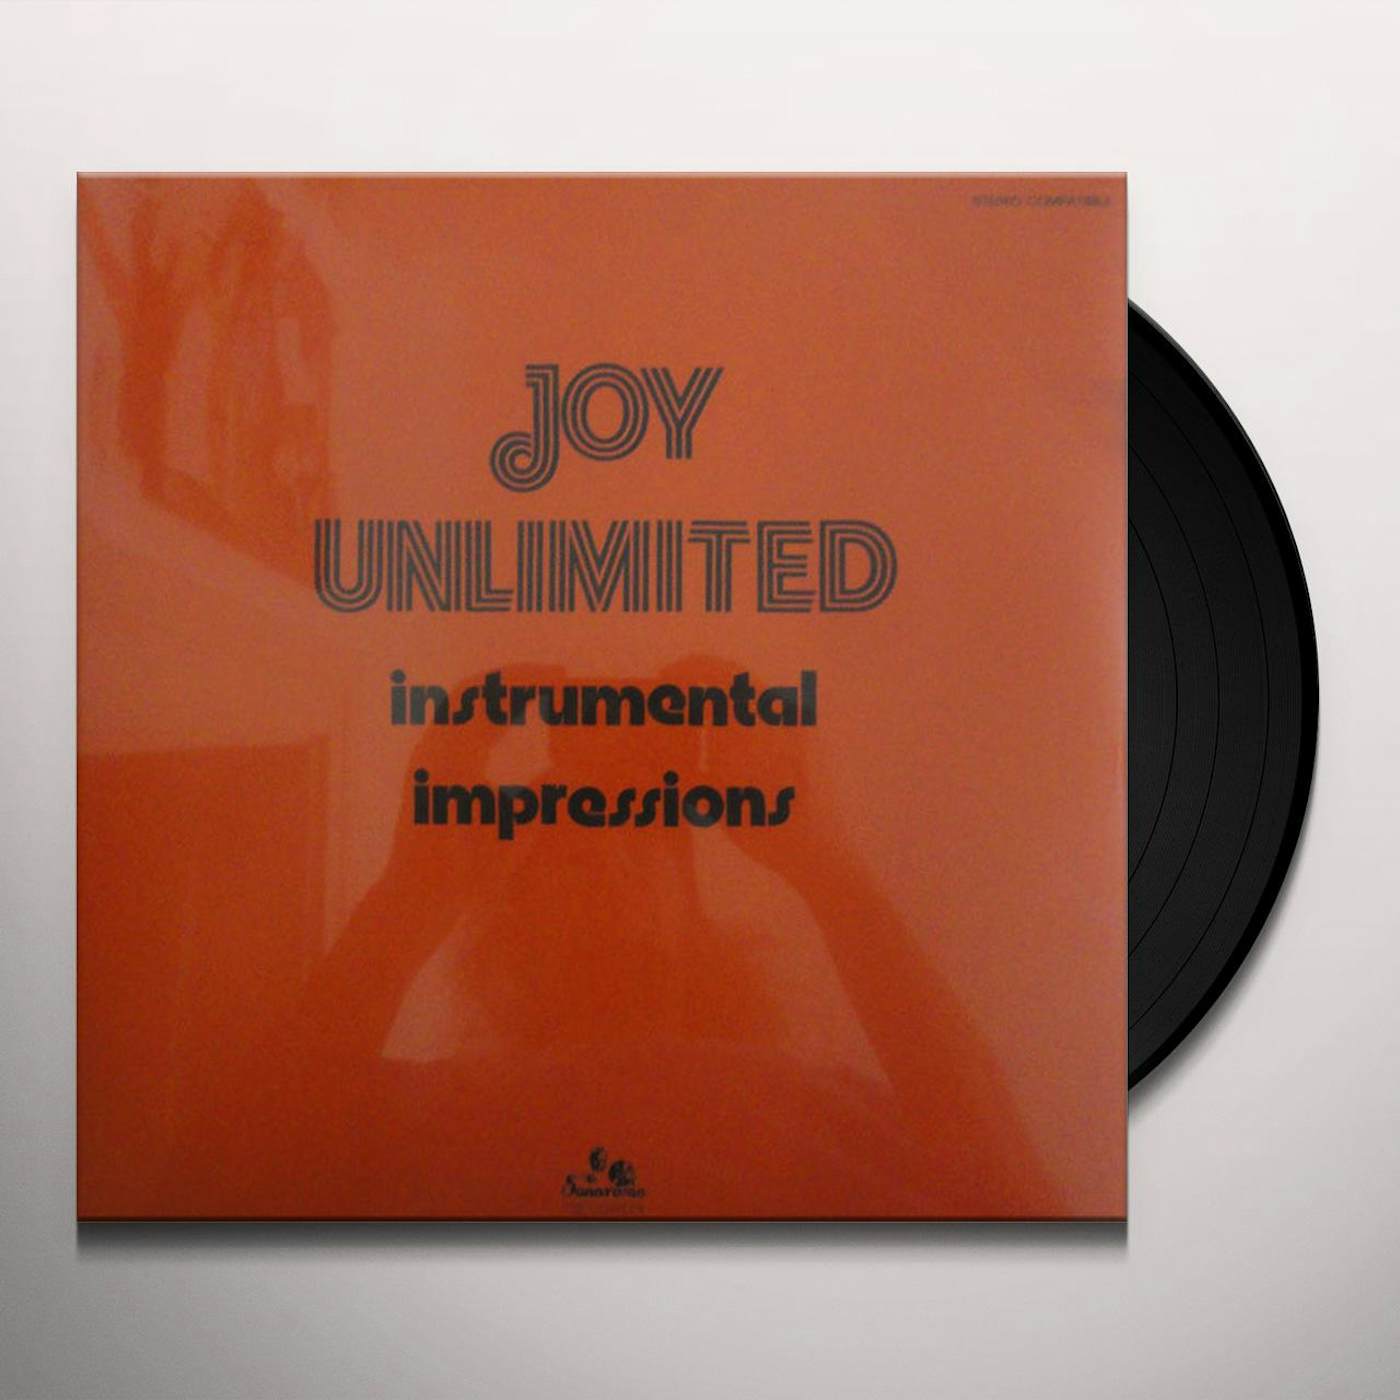 Joy Unlimited Instrumental Impressions Vinyl Record